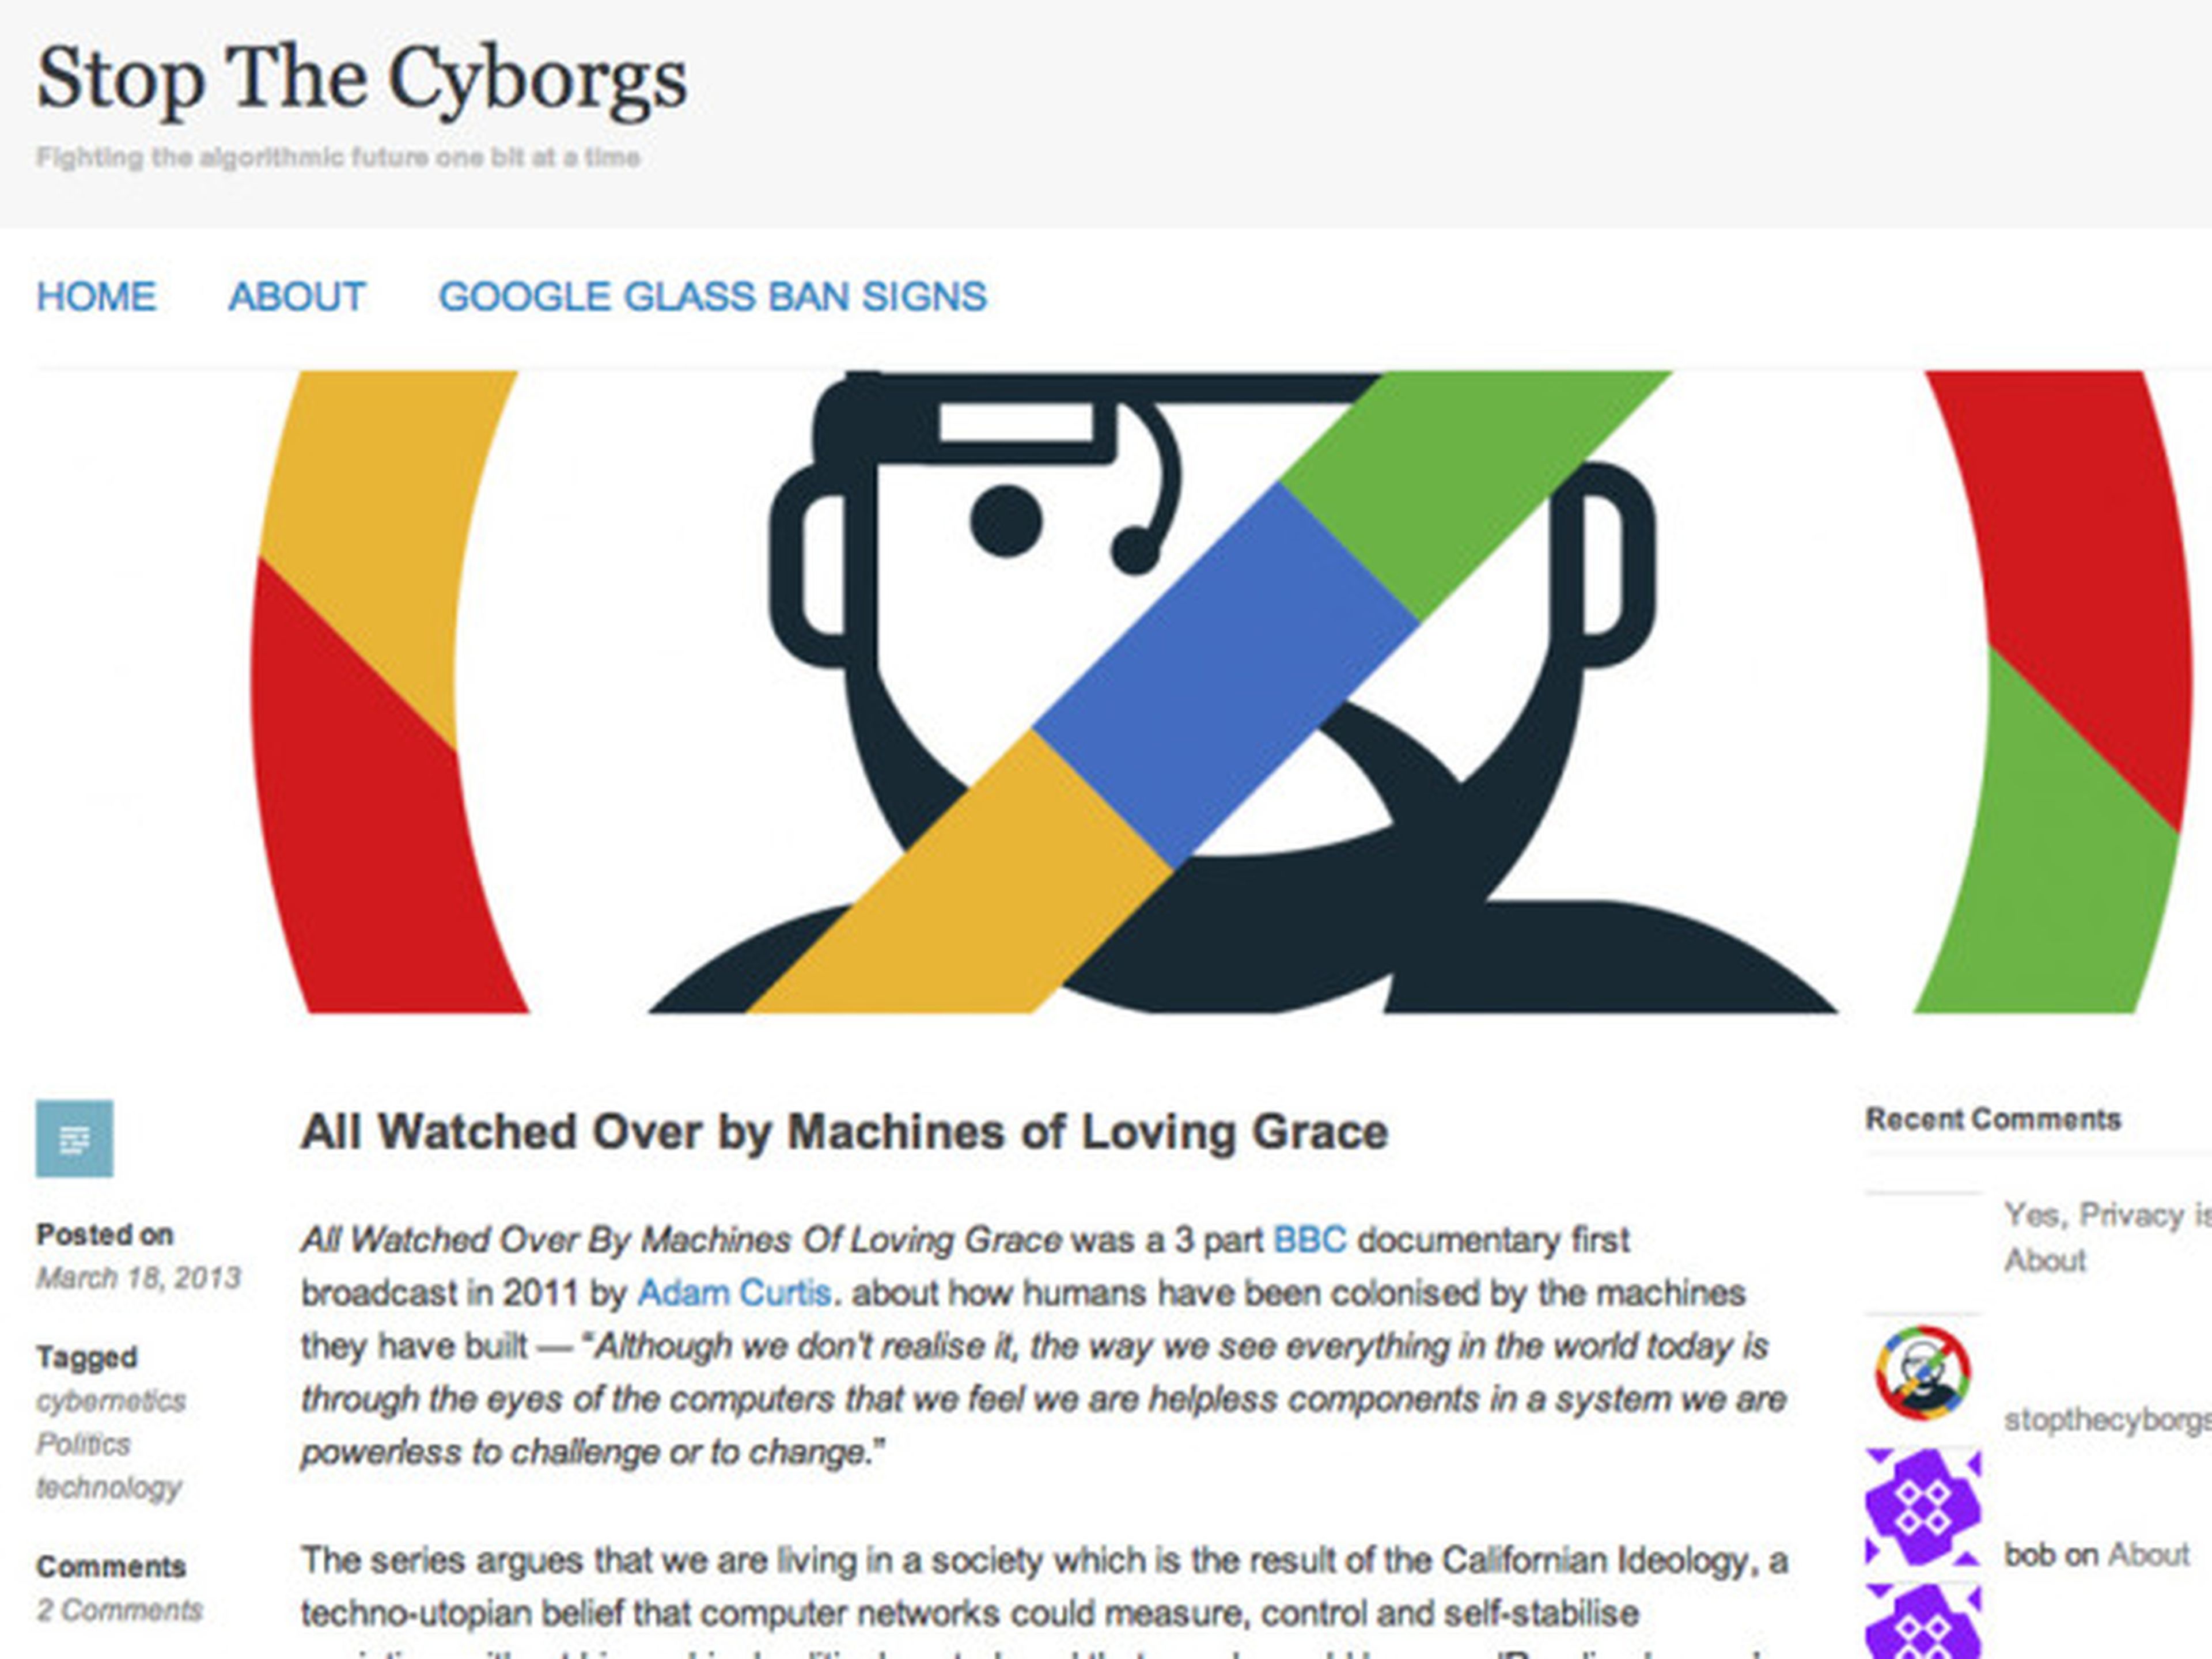 Stop the Cyborgs